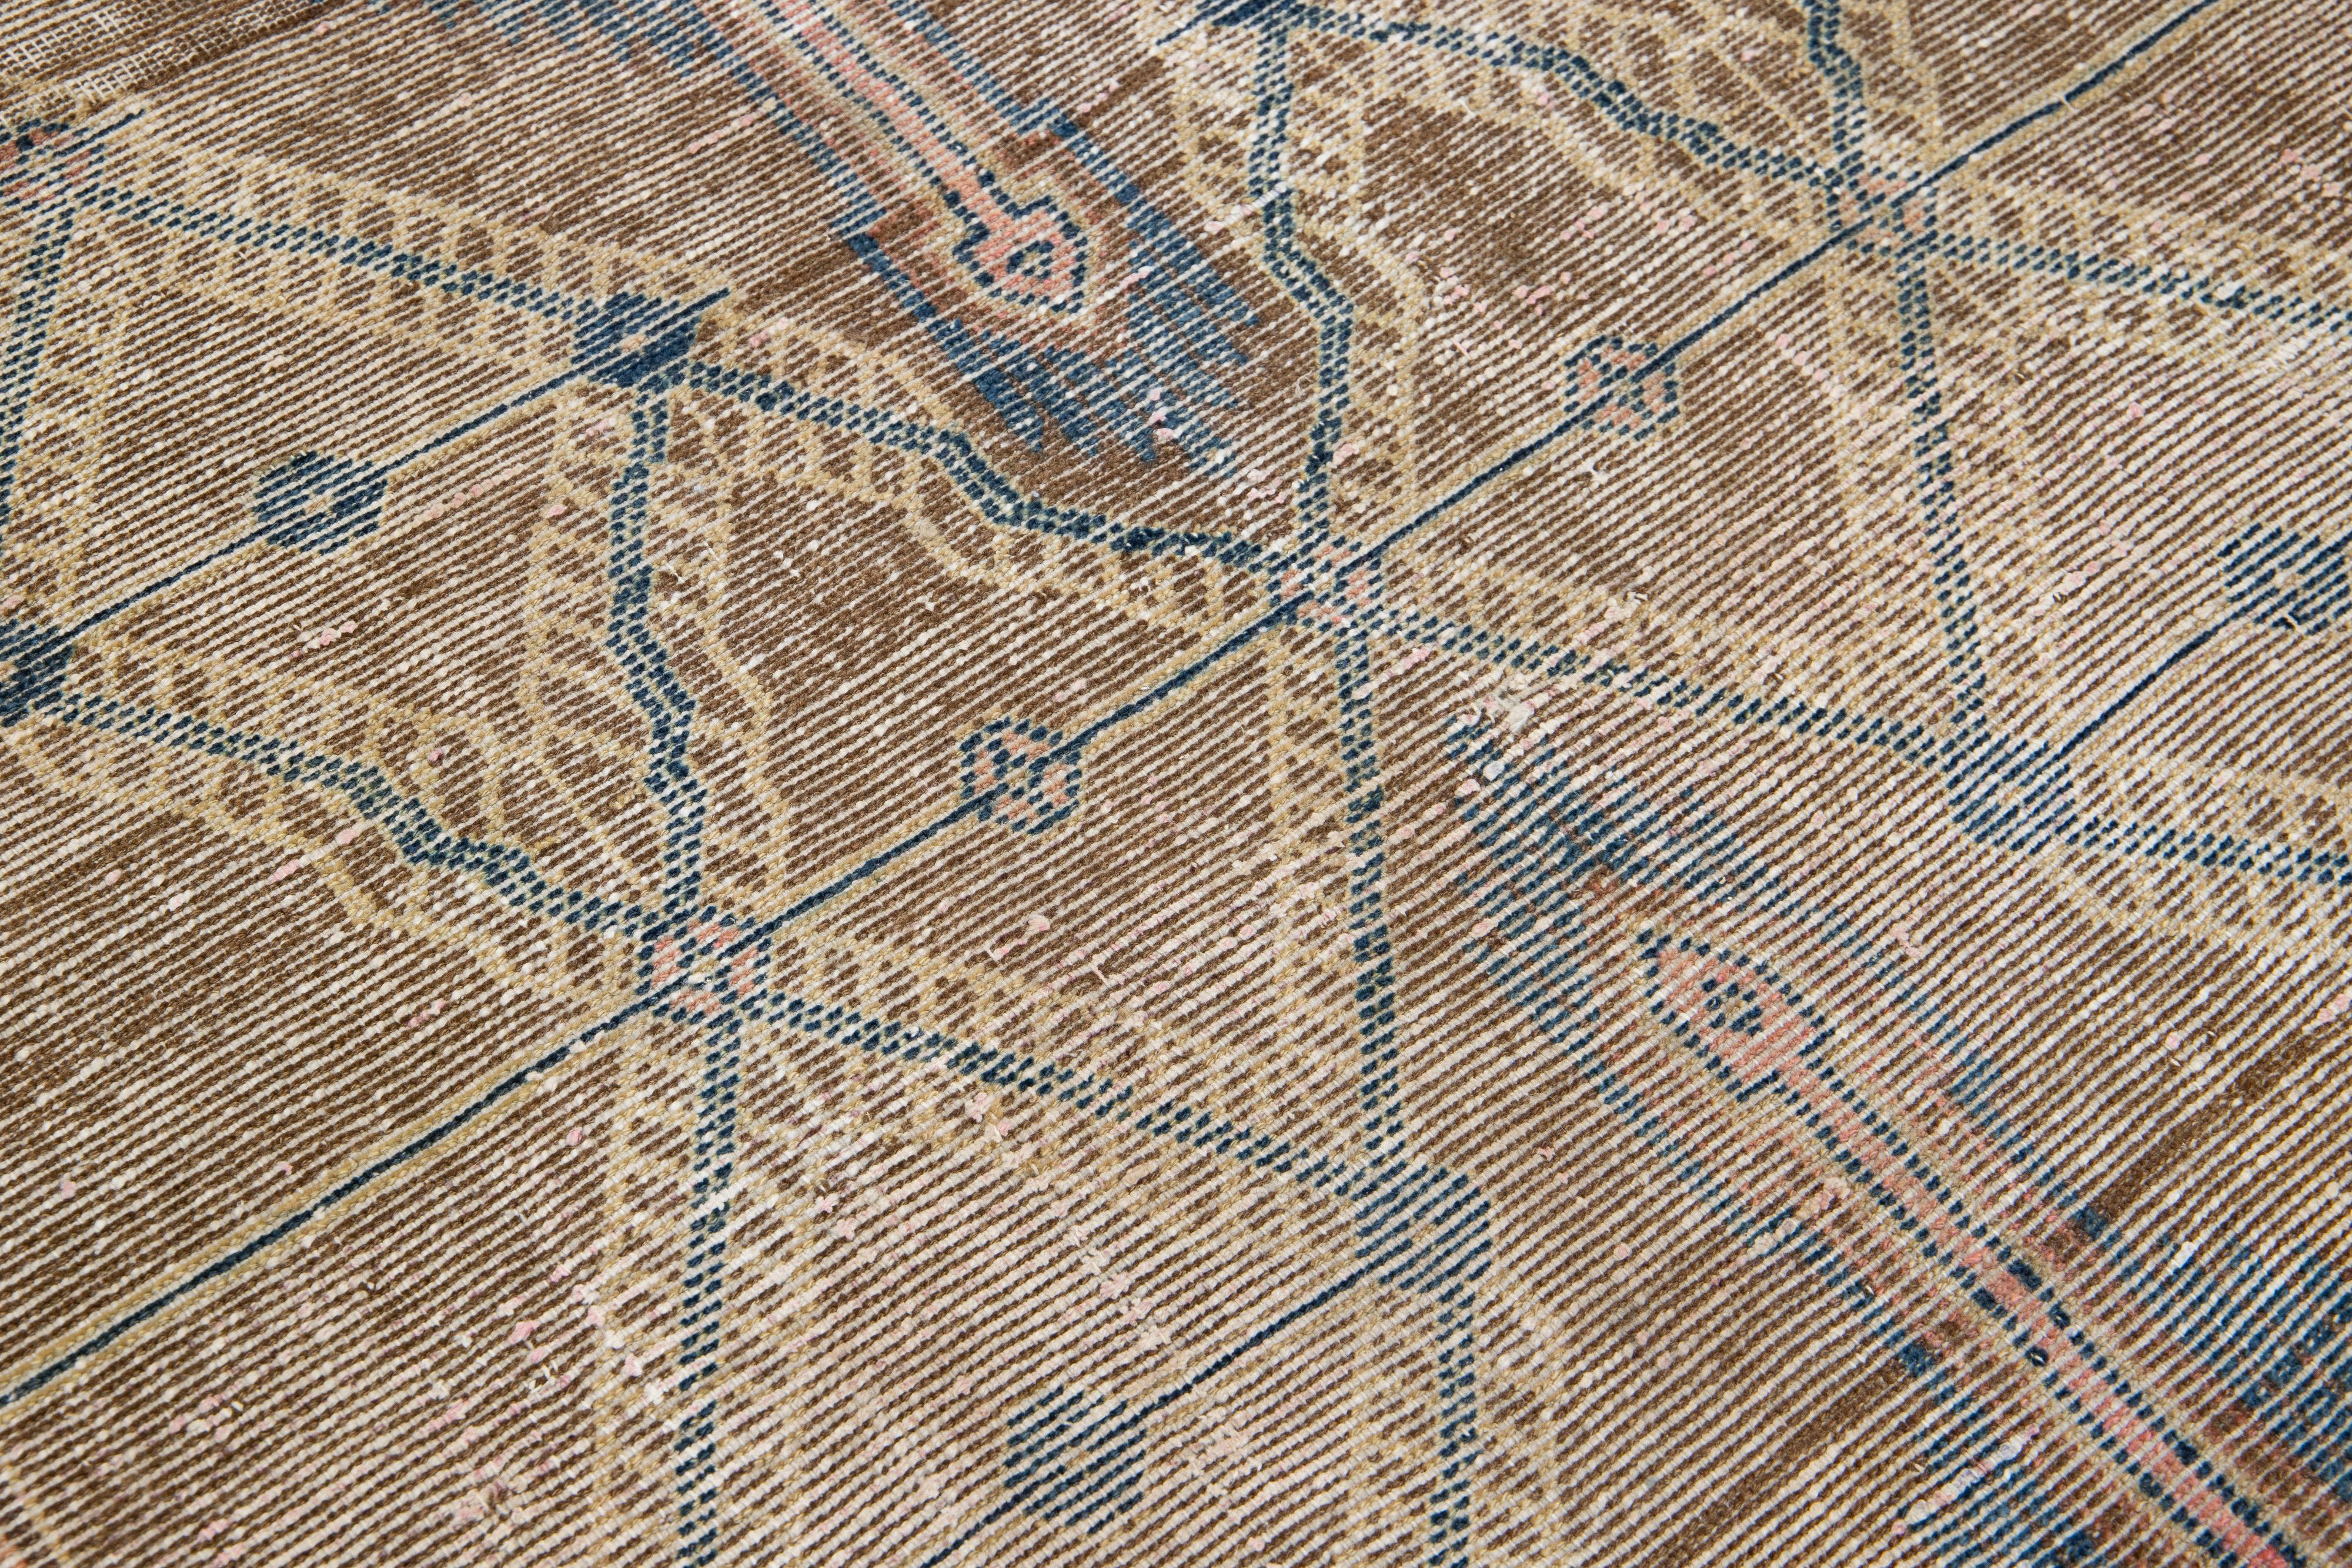 Laine 4 x 15 Vintage Distressed Persian Wool Runner In Brown With Tribal Motif (Chemin de table en laine persane vieillie avec motif tribal) en vente